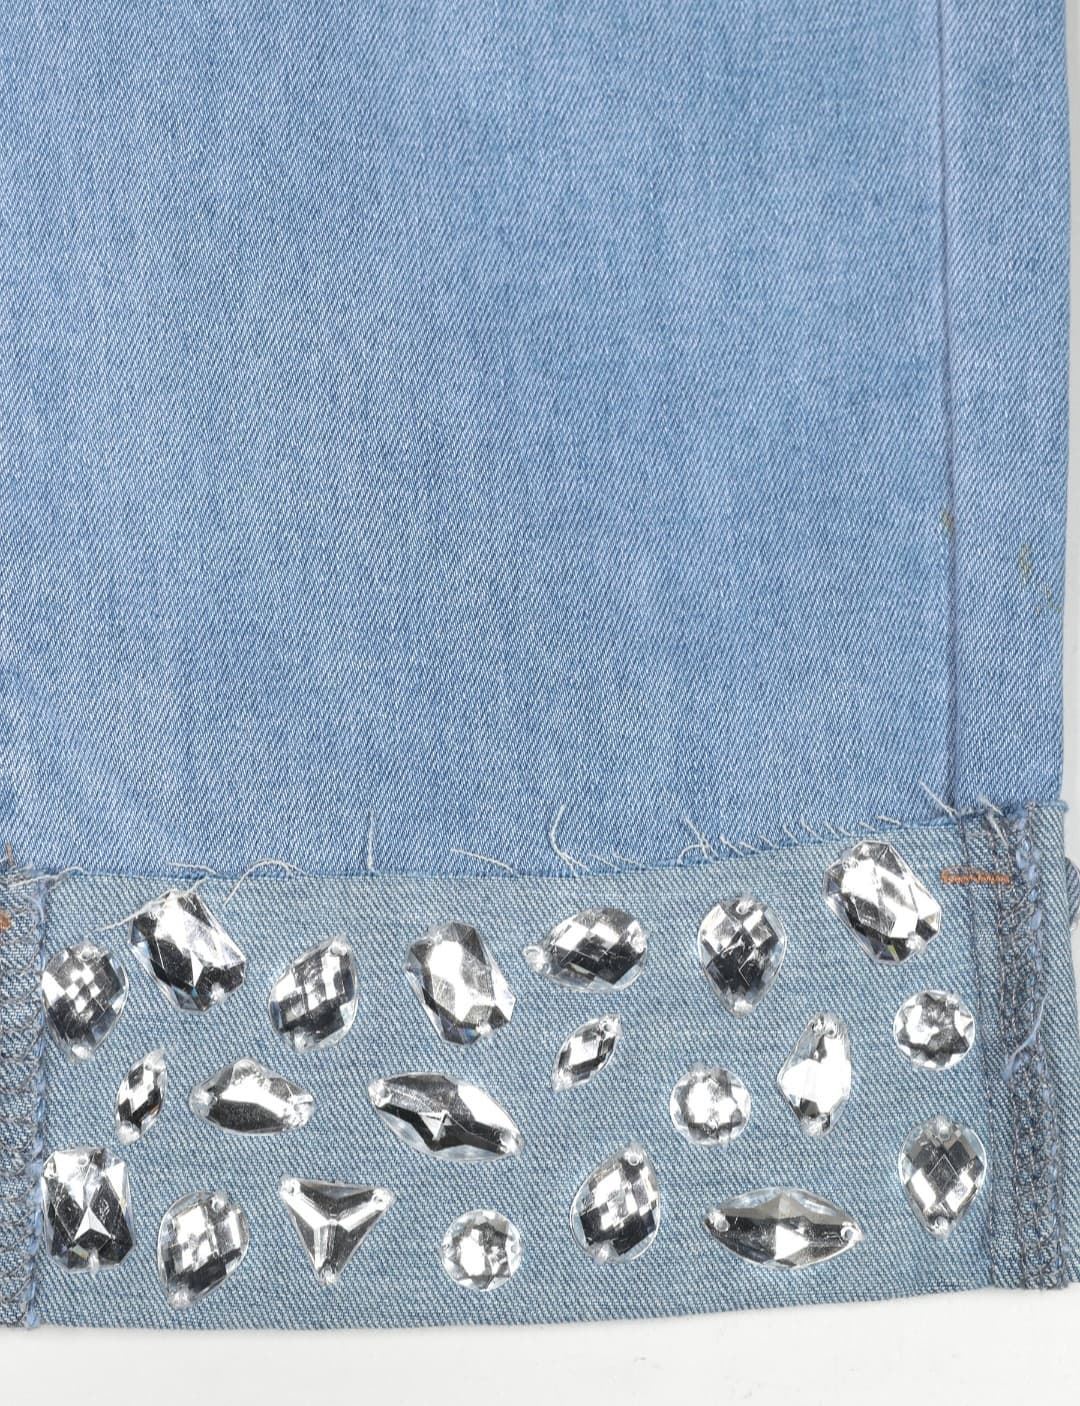 Jeans zafiro - Imagen 3